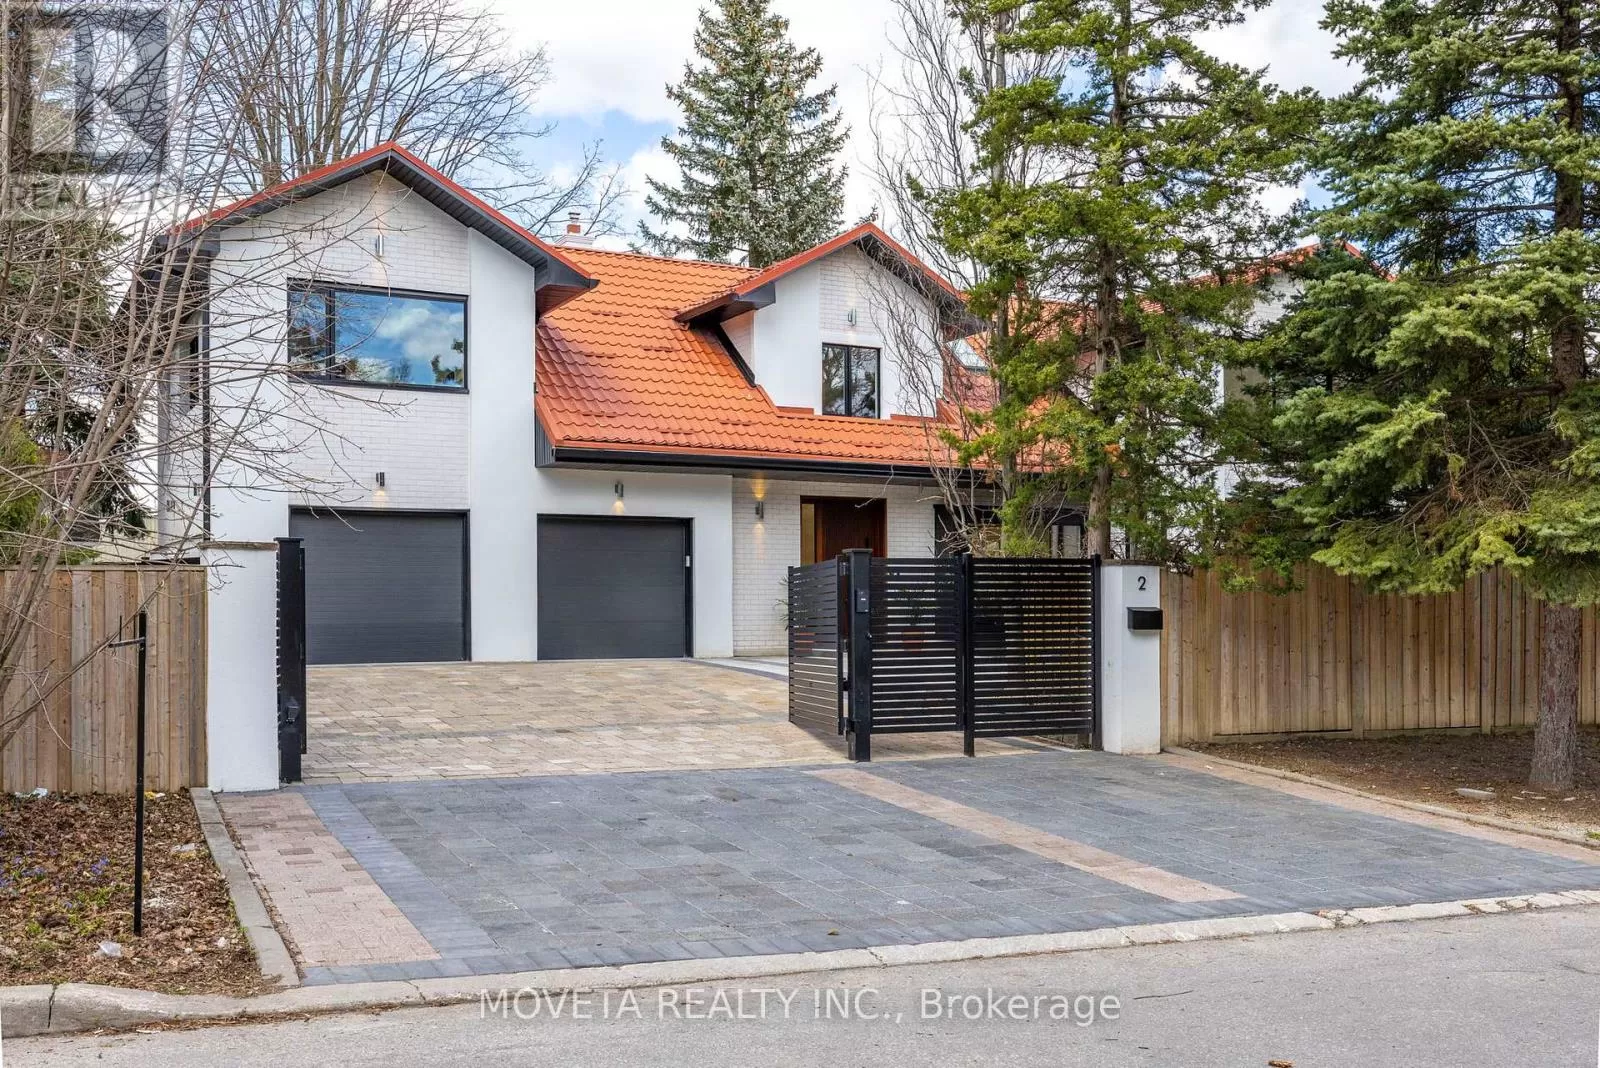 House for rent: 2 Addison Crescent, Toronto, Ontario M3B 1K8